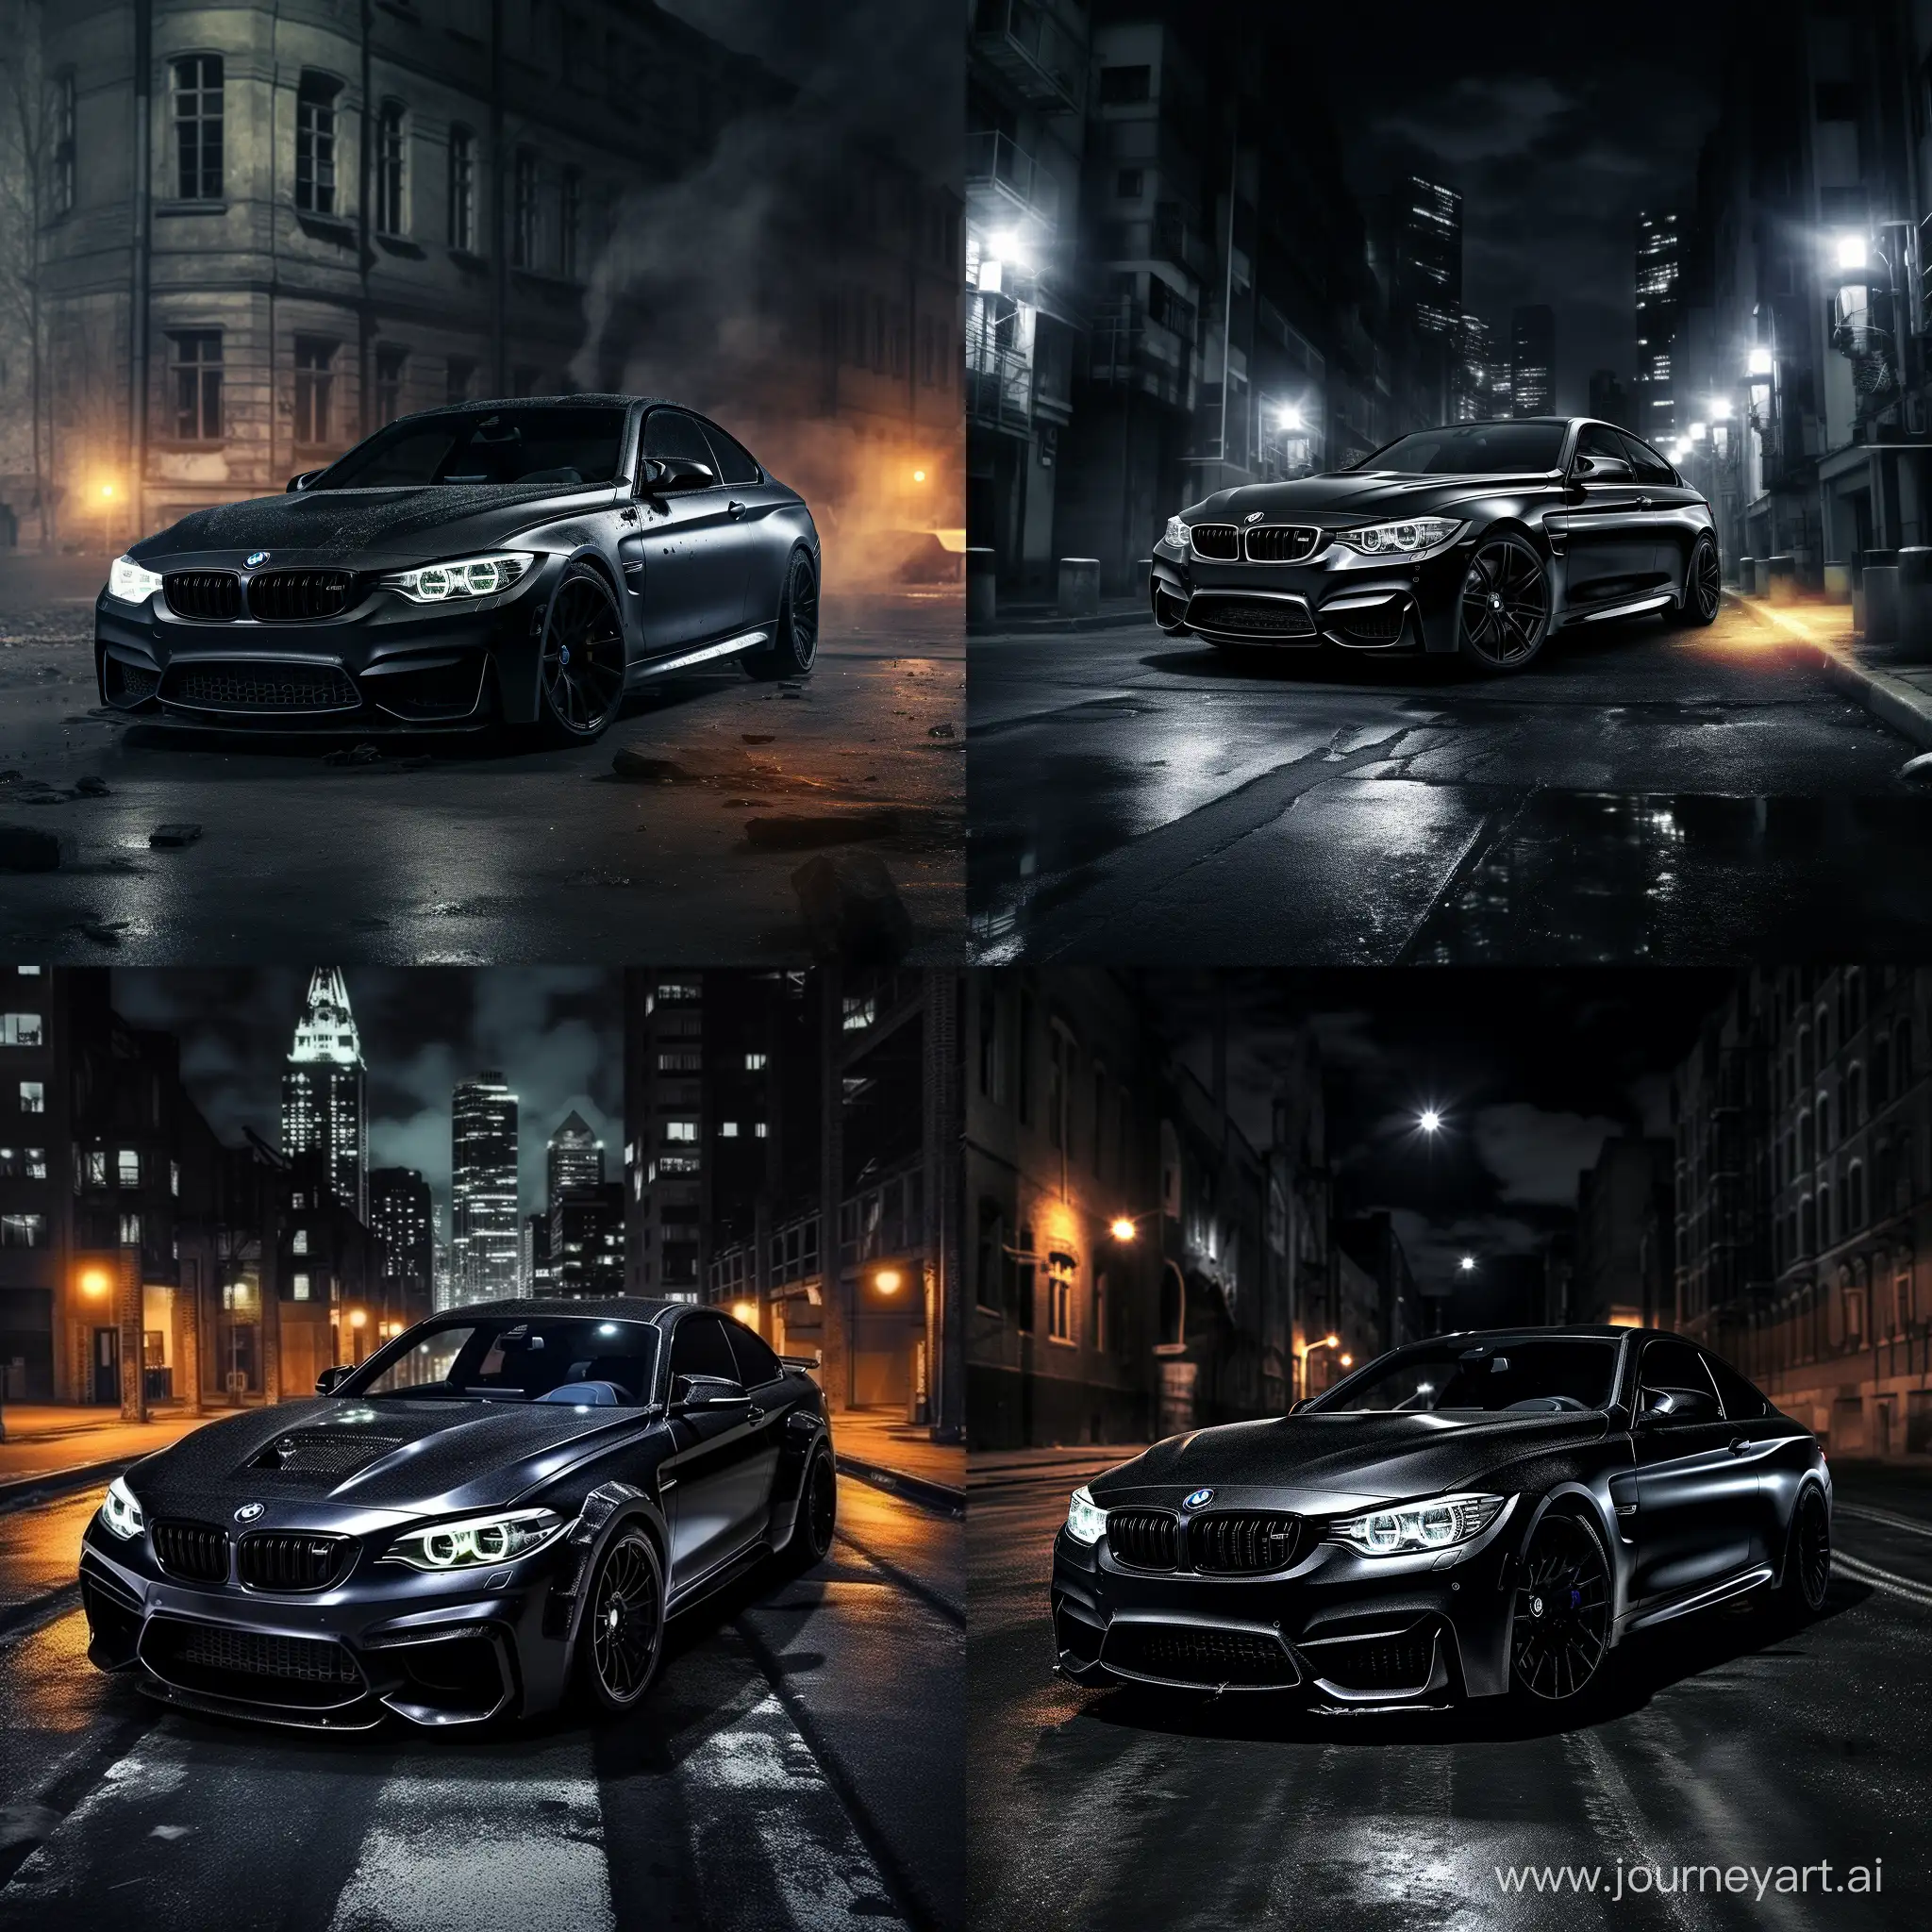 Sleek-BMW-AMG-Black-Edition-Racing-Through-a-Mysterious-Urban-Night